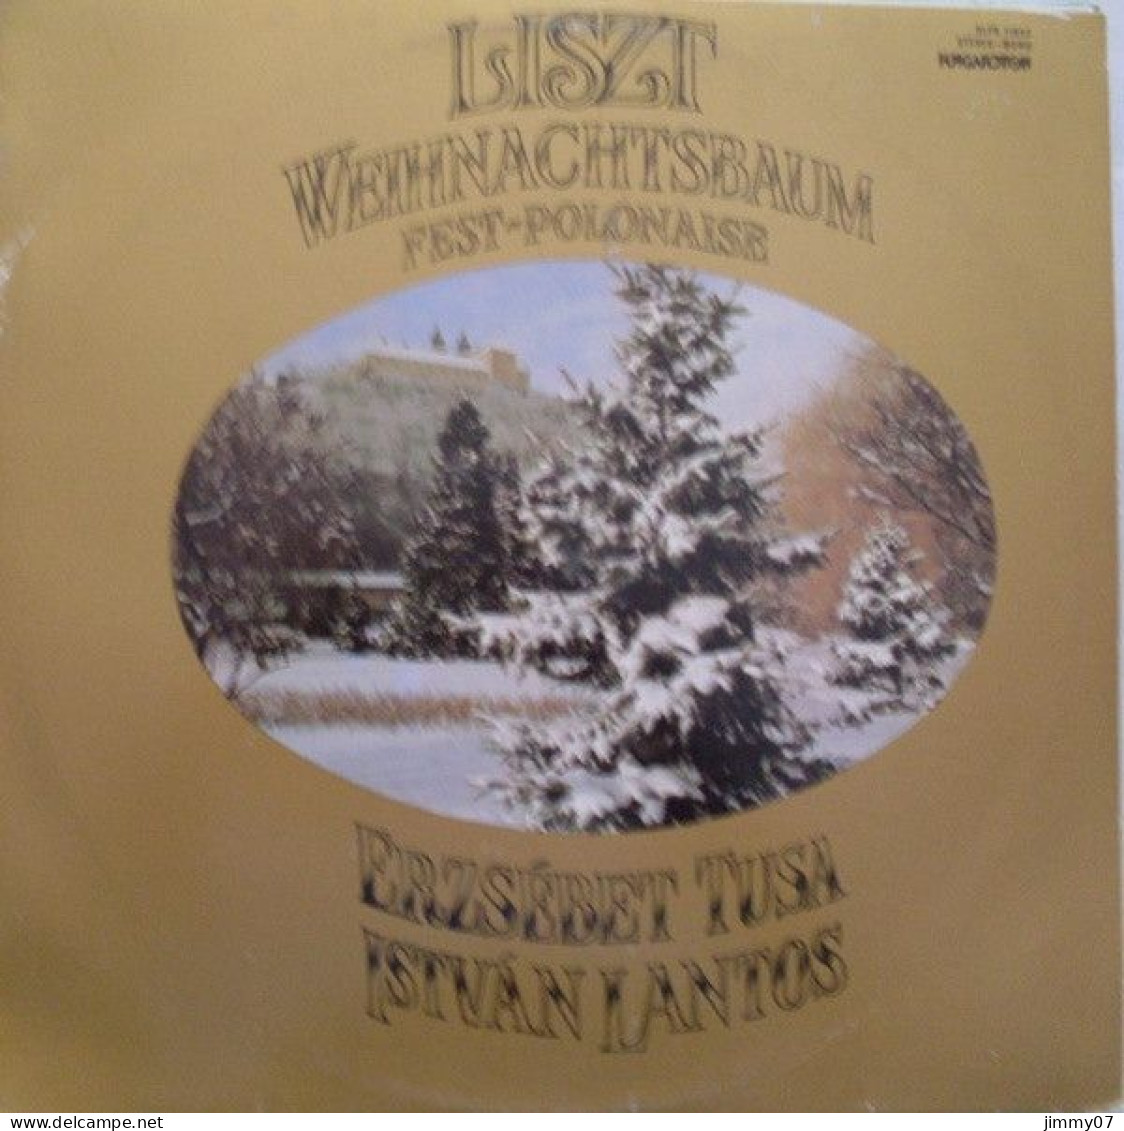 Franz Liszt, Erzsébet Tusa*, István Lantos* - Weihnachtsbaum - Fest-Polonaise (LP, Album) - Classica